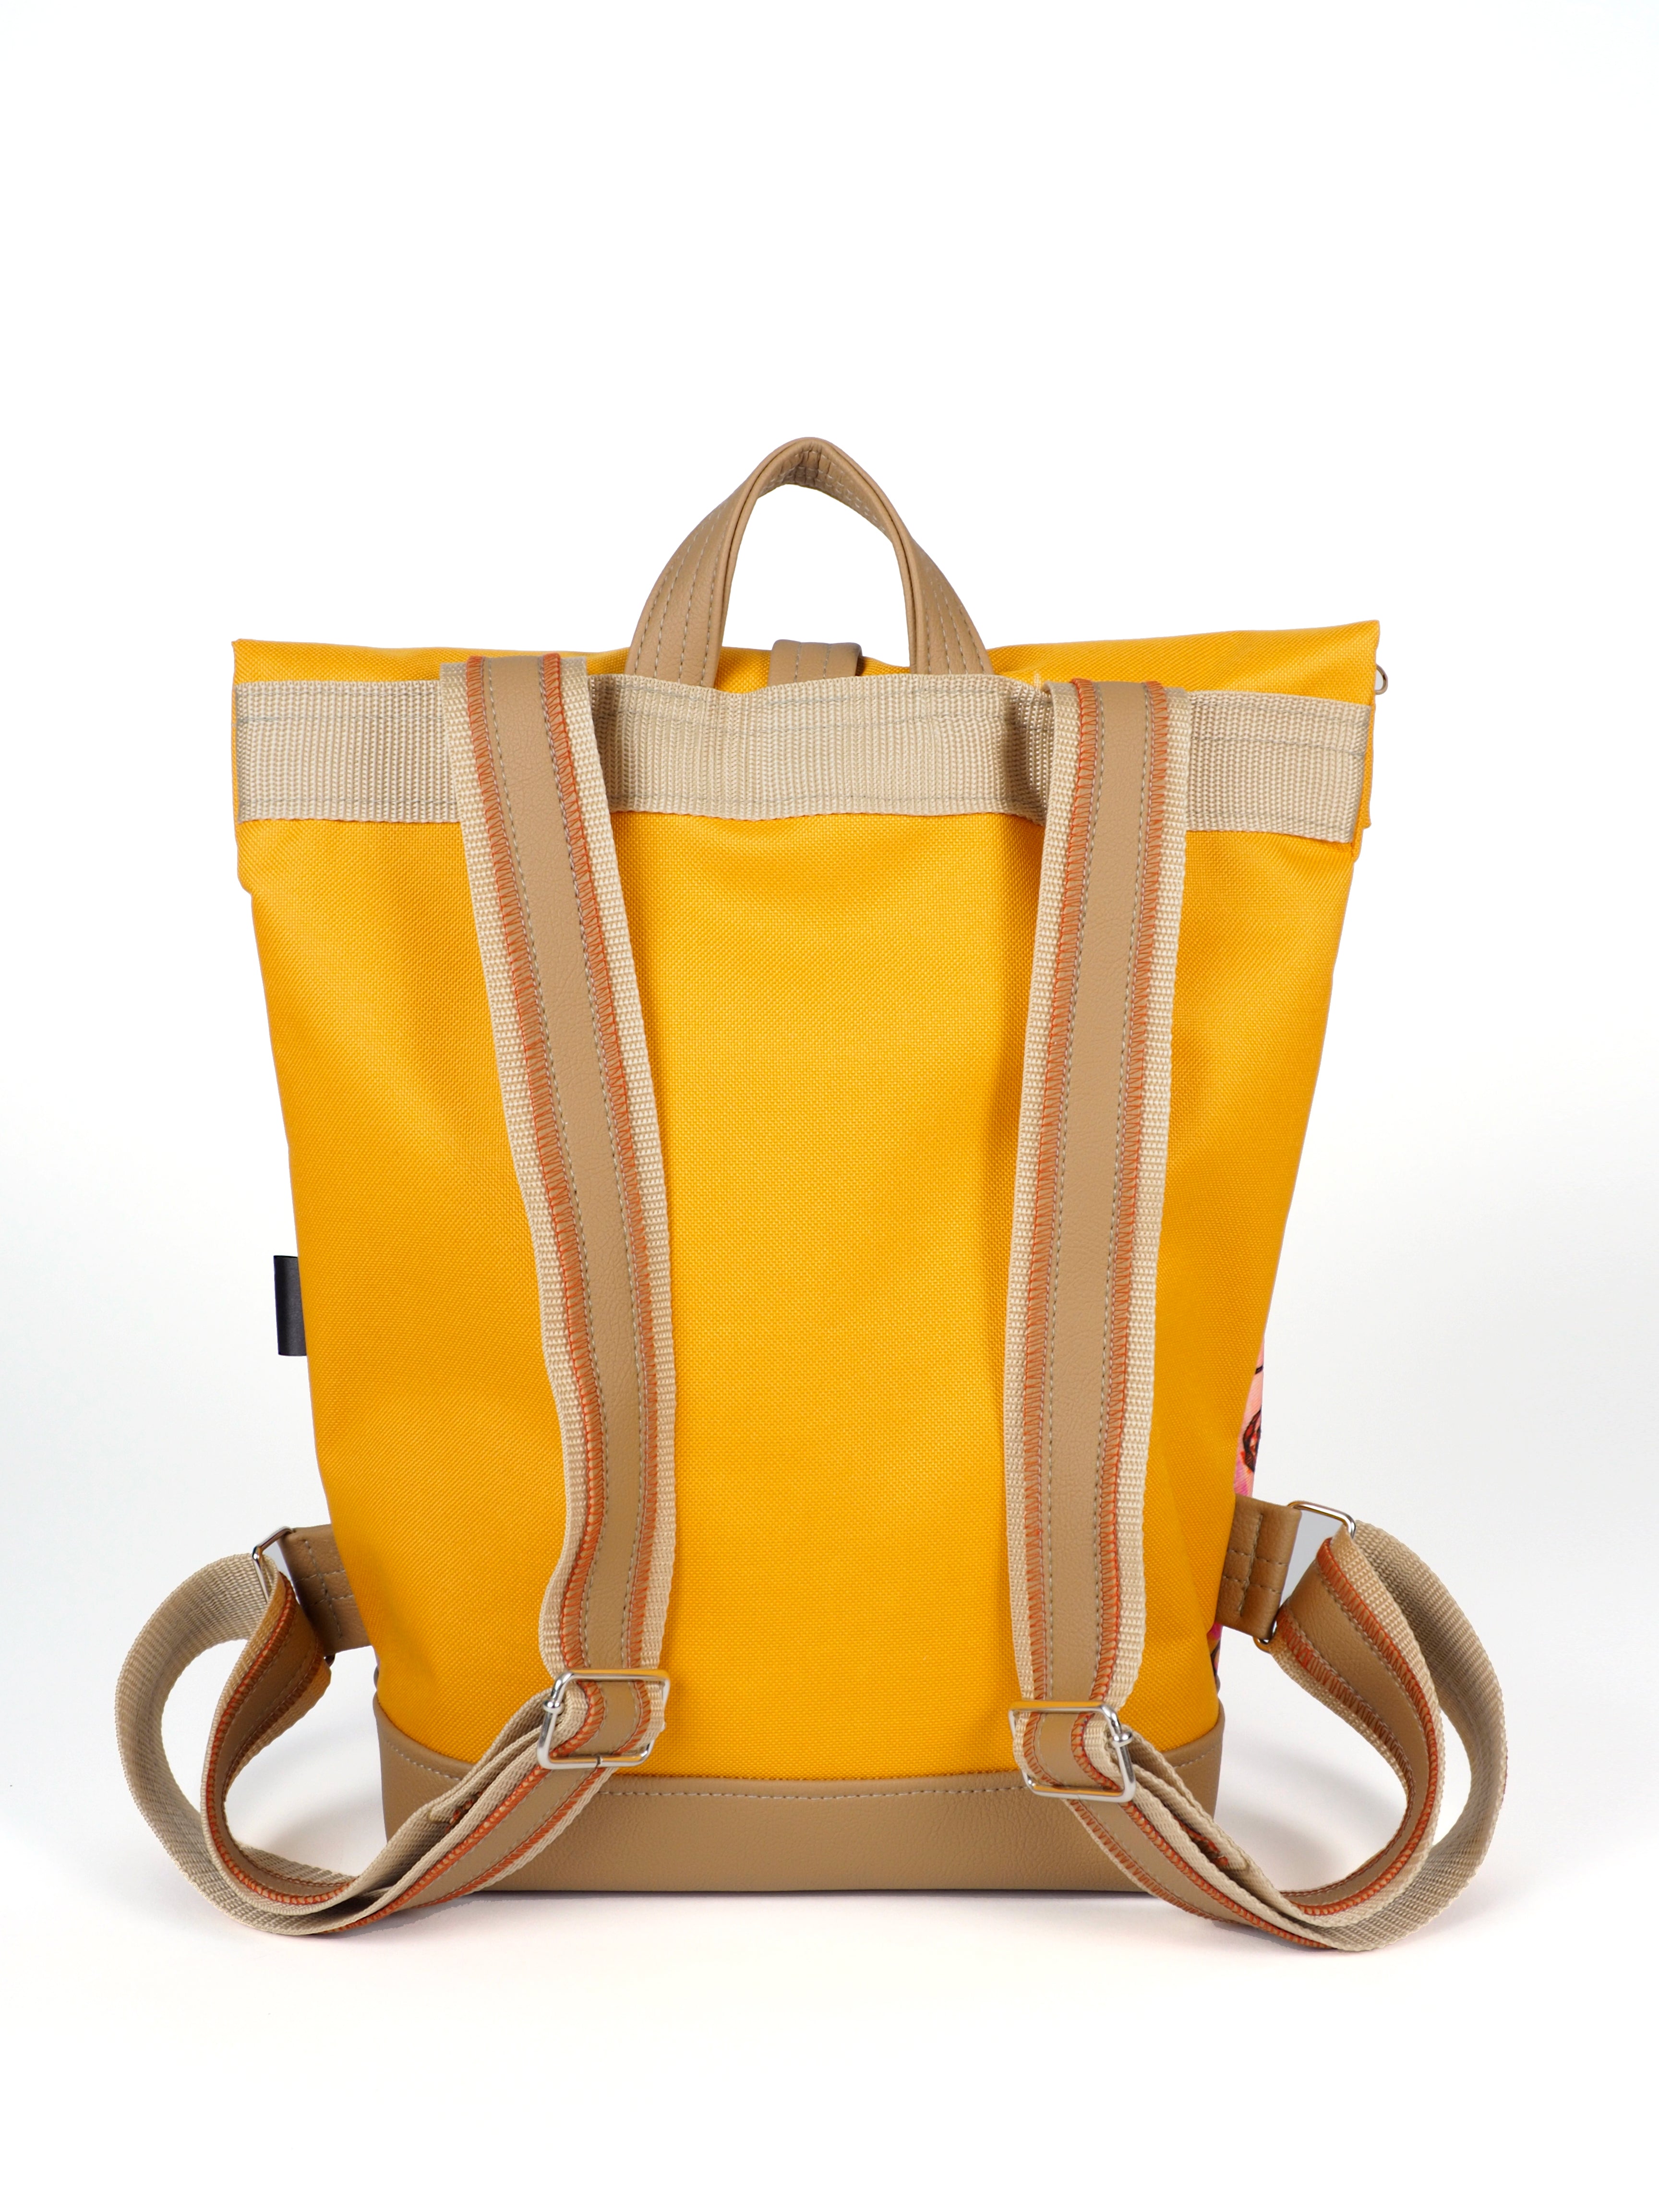 Bardo roll backpack - Summer - Premium Bardo backpack from BARDO ART WORKS - Just lvabstract, art, backpack, black, dance, dark blue, gift, handemade, jazz, orange, purple, red, tablet, urban style, vegan leather, woman85.00! Shop now at BARDO ART WORKS